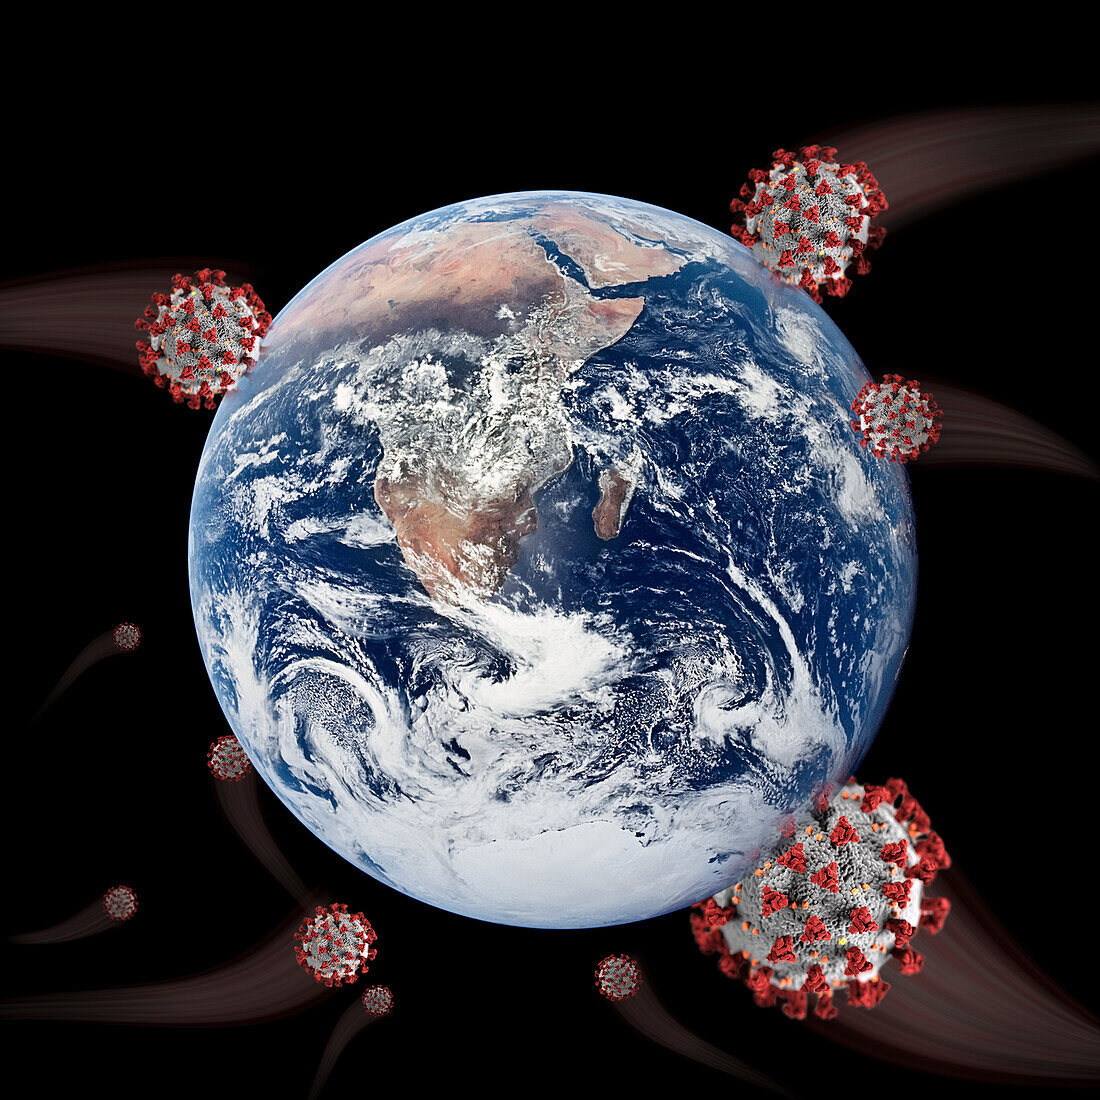 Coronavirus (Covid-19) spreading across the earth on a black background